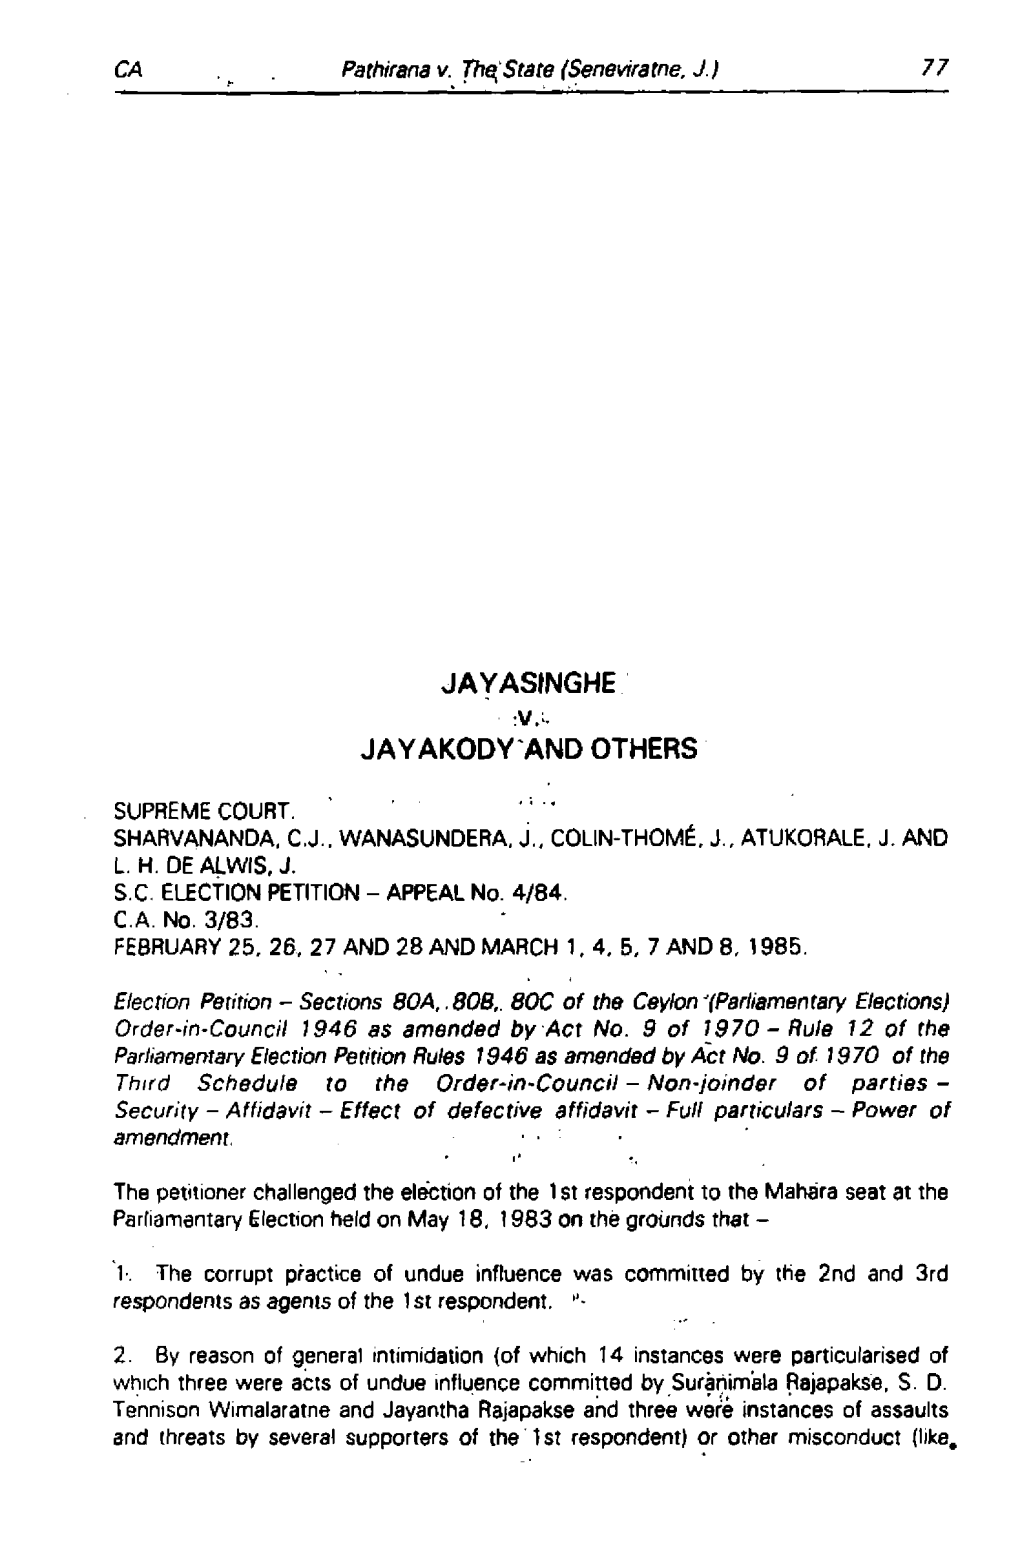 Jayasinghe Jayakody'and Others